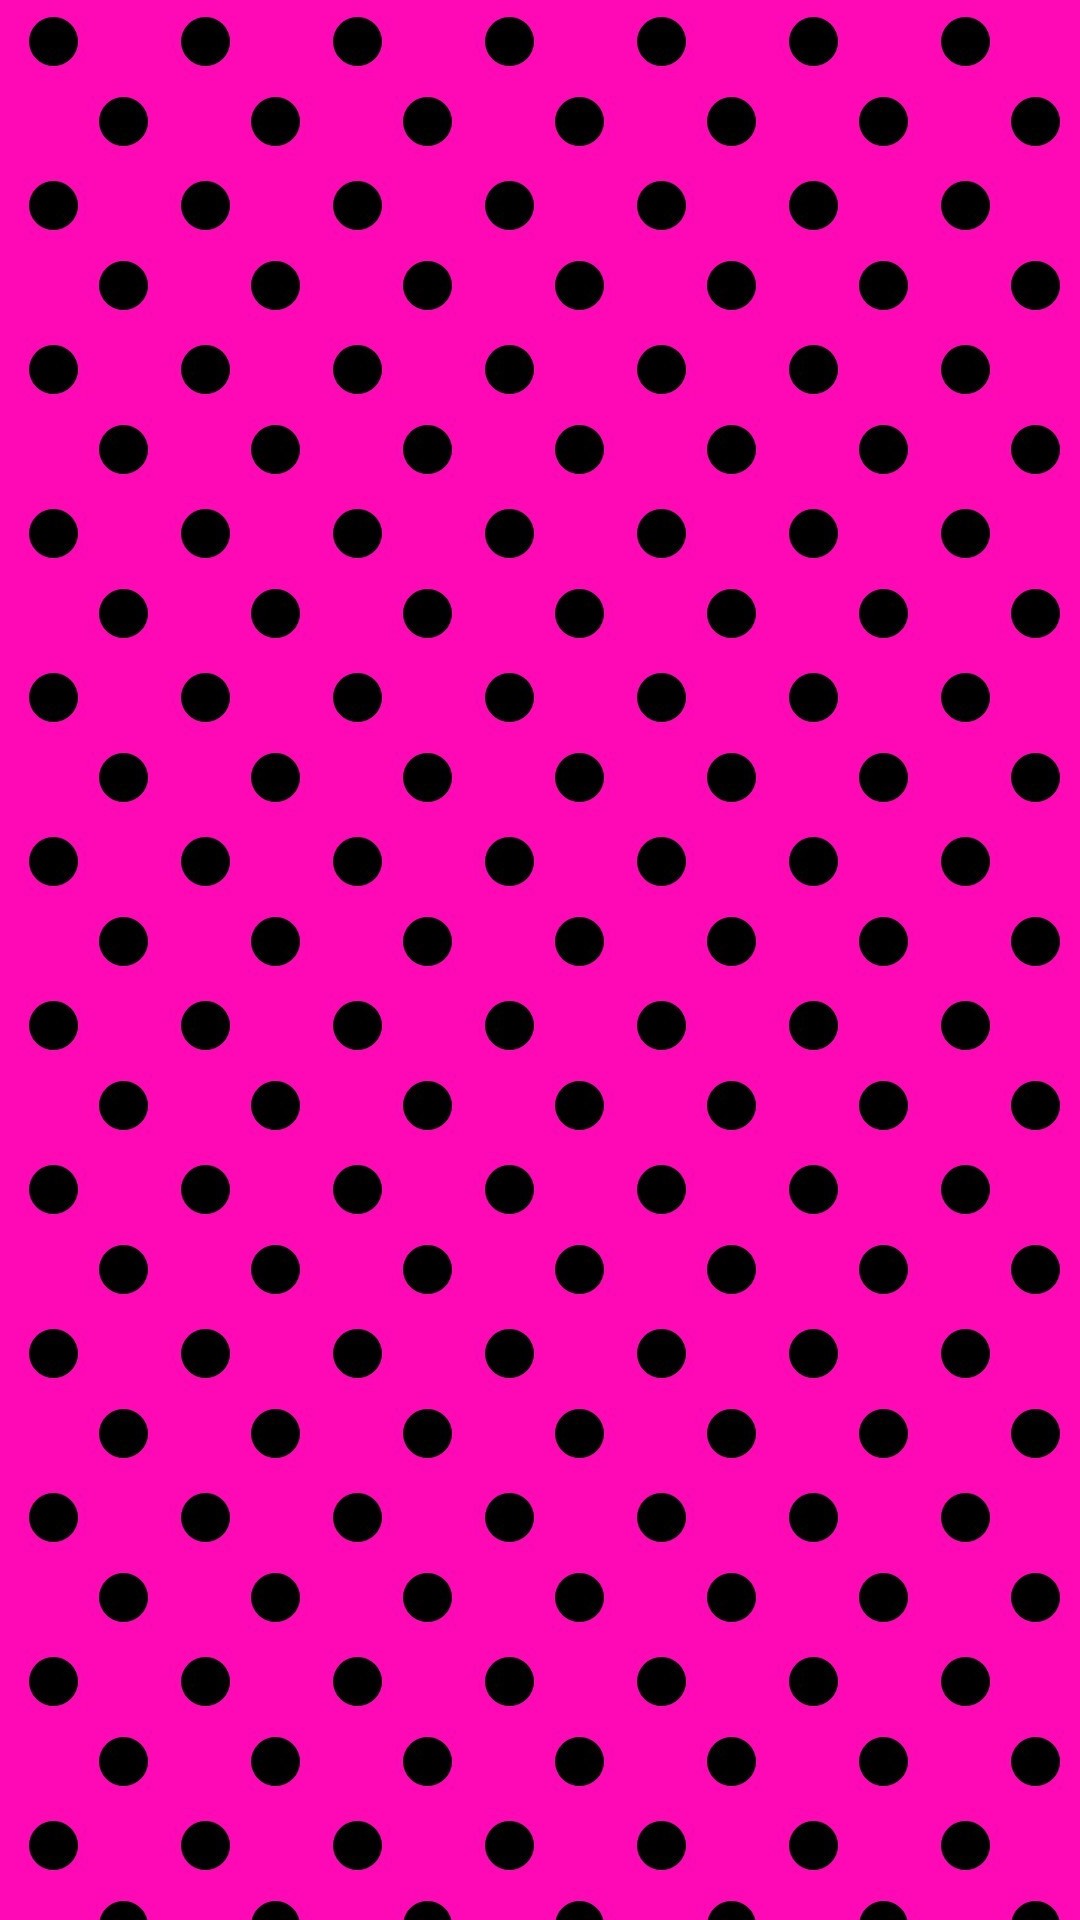 Pink Dots Android Wallpaper